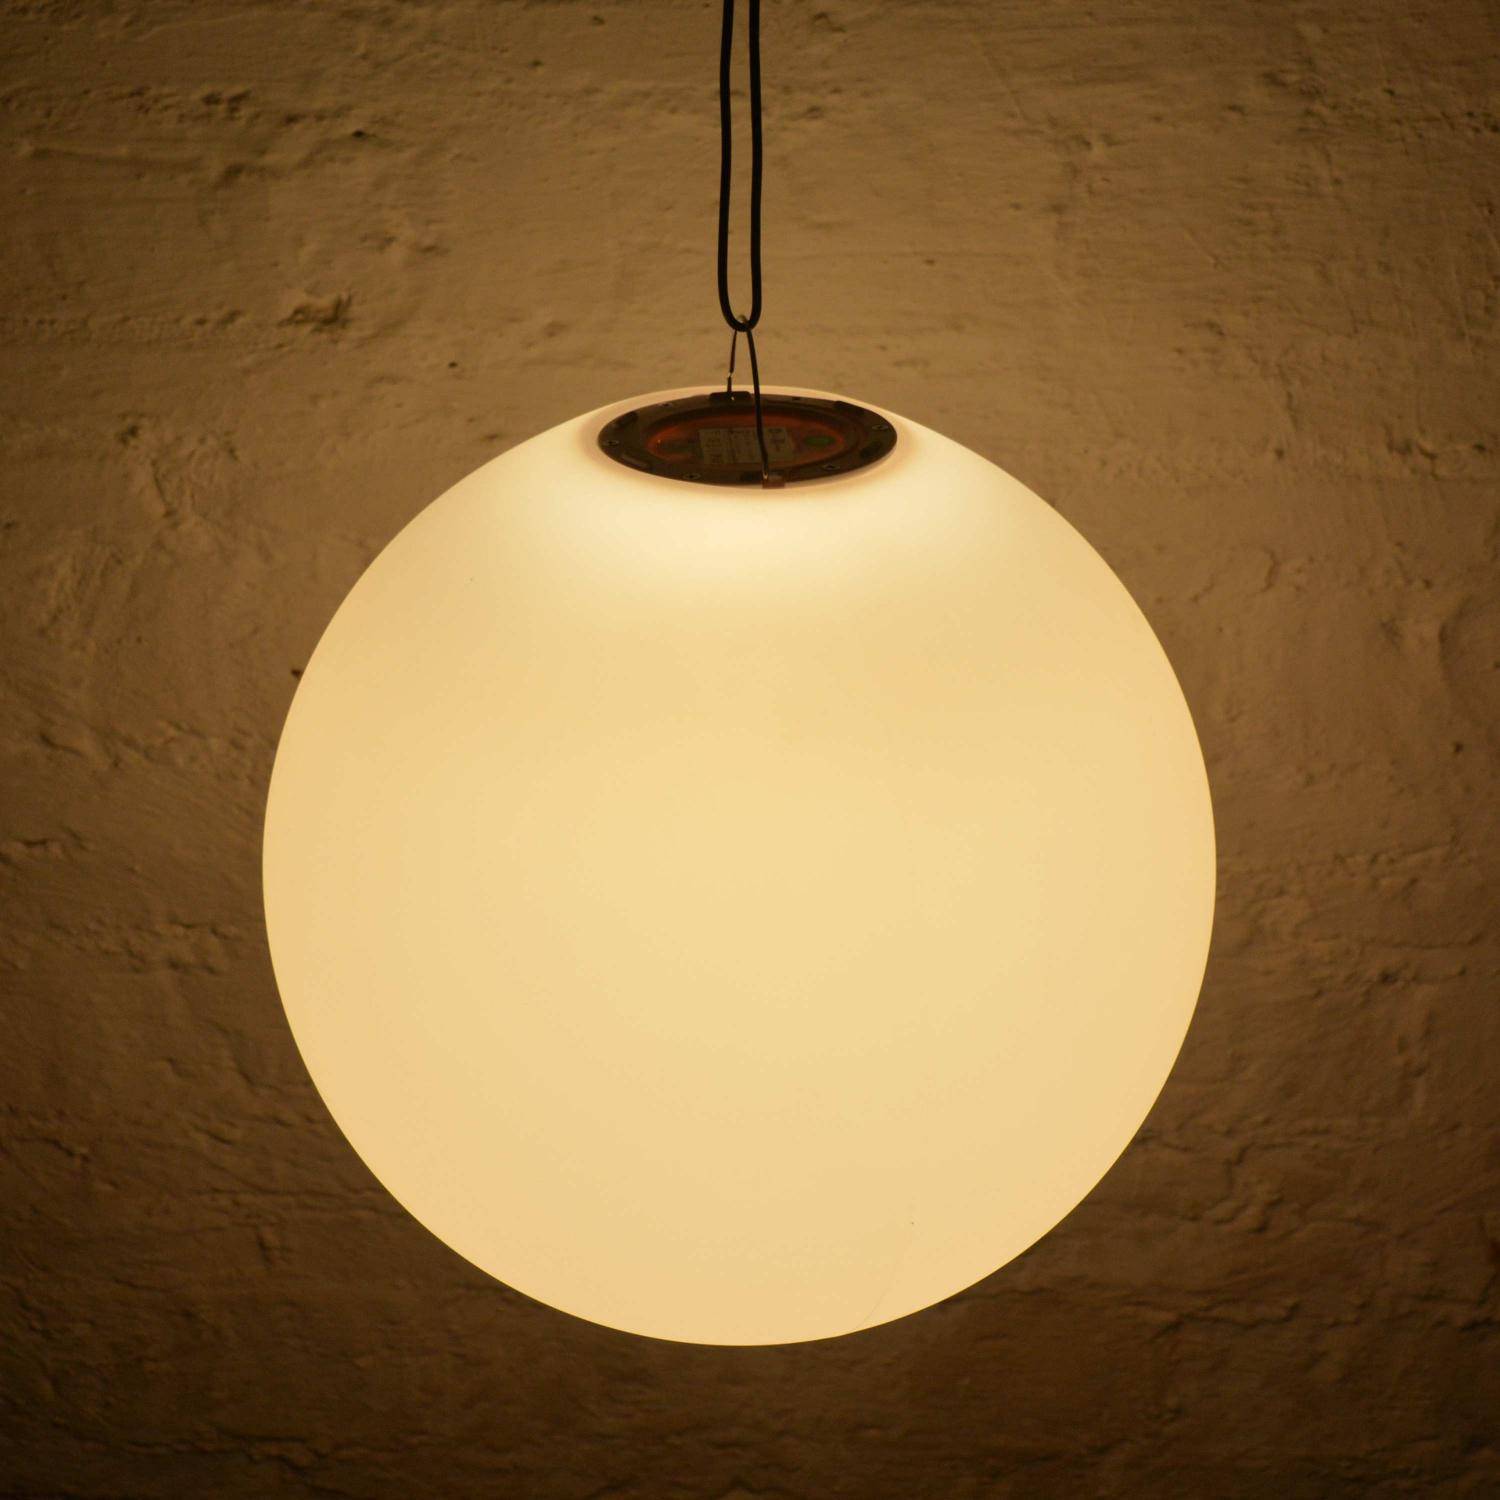 50cm spherical LED lamp – Decorative light sphere, remote control, Warm white Photo5